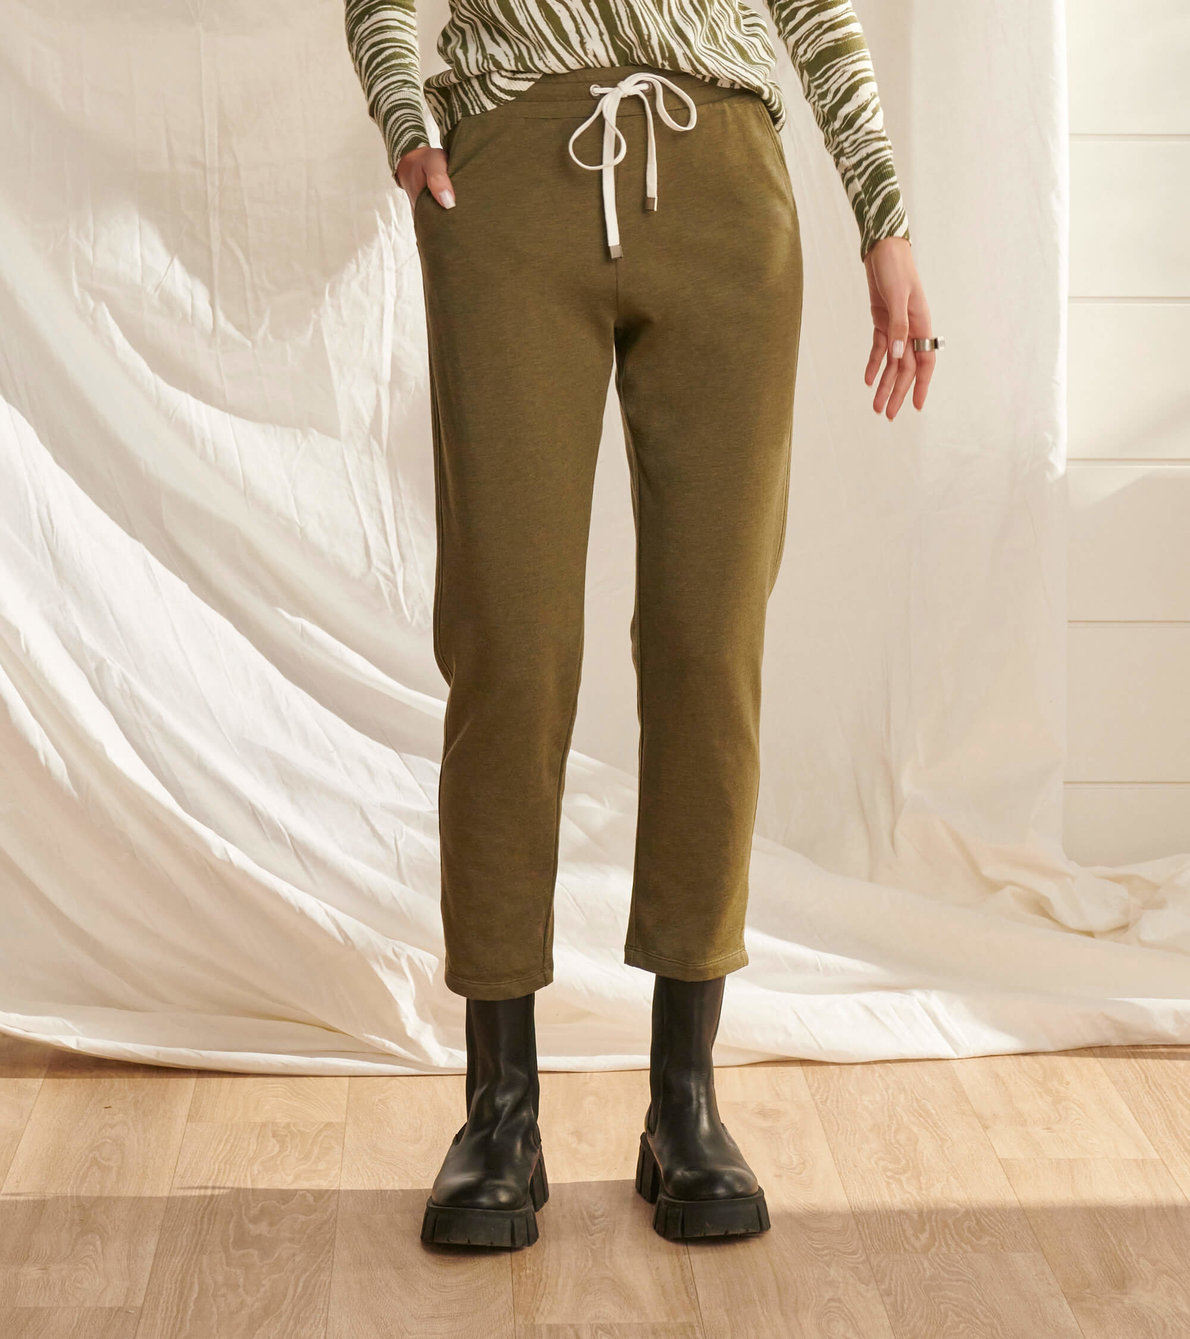 View larger image of Adrien Jogger - Loden Green Melange